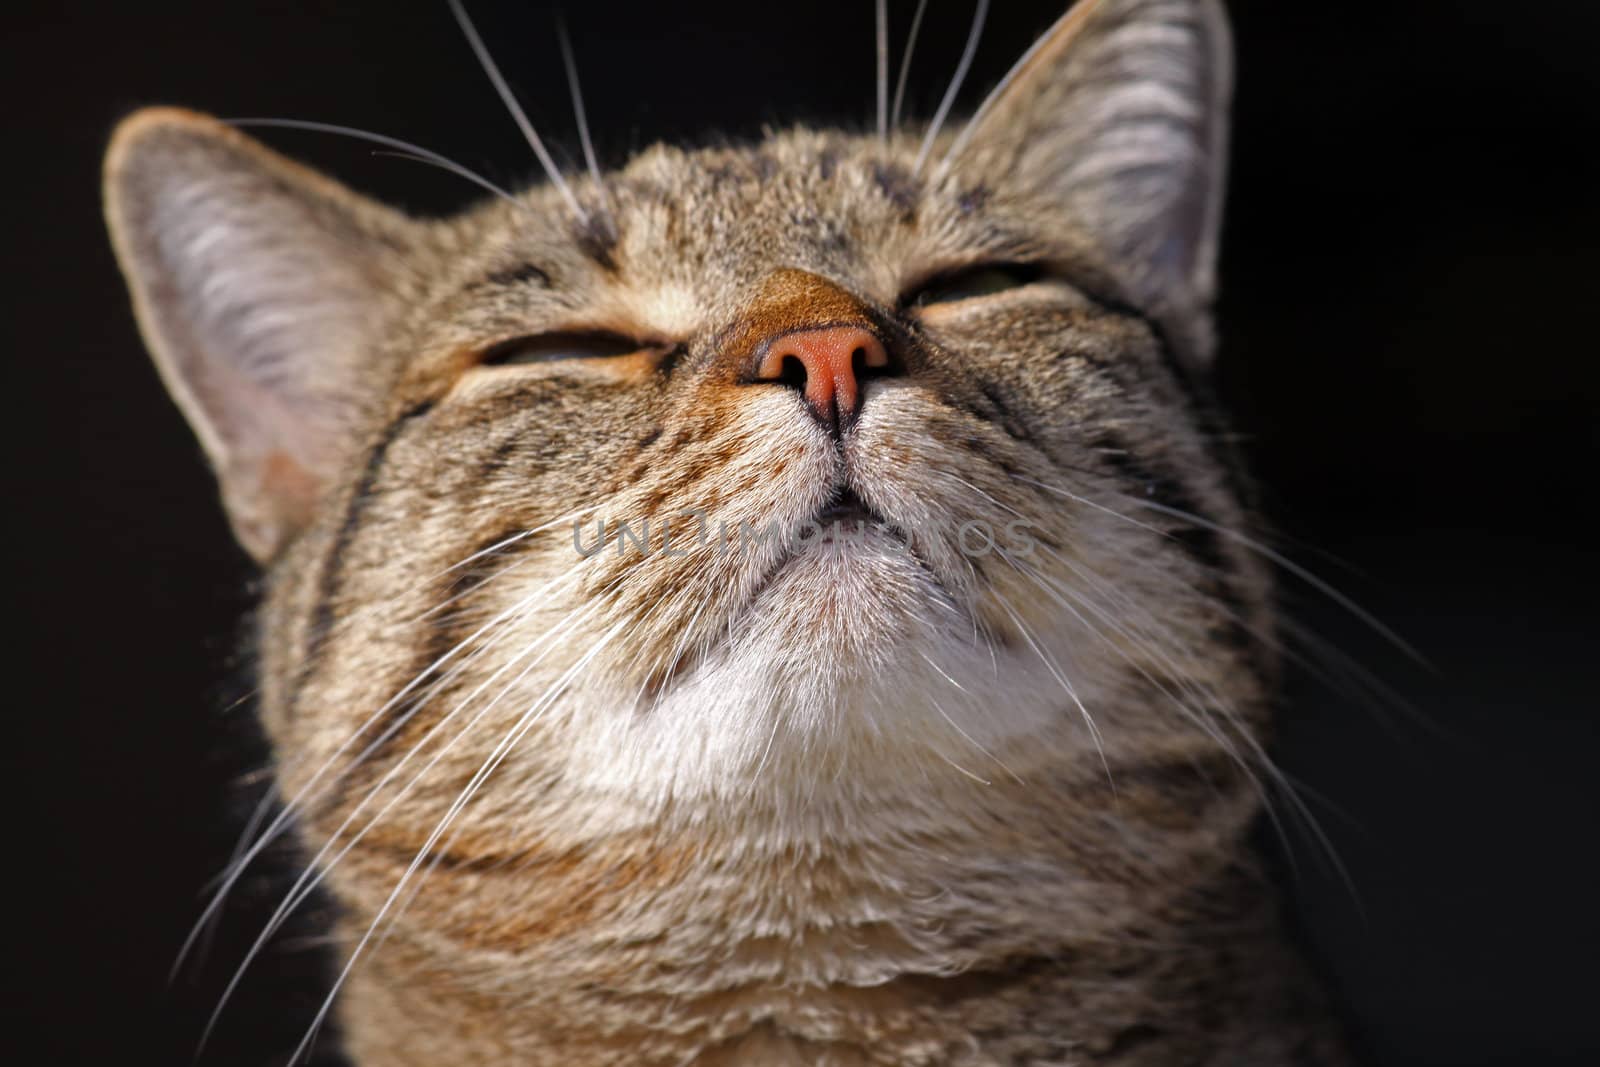 Mixed-breed cat, Felis catus, looks at the cam